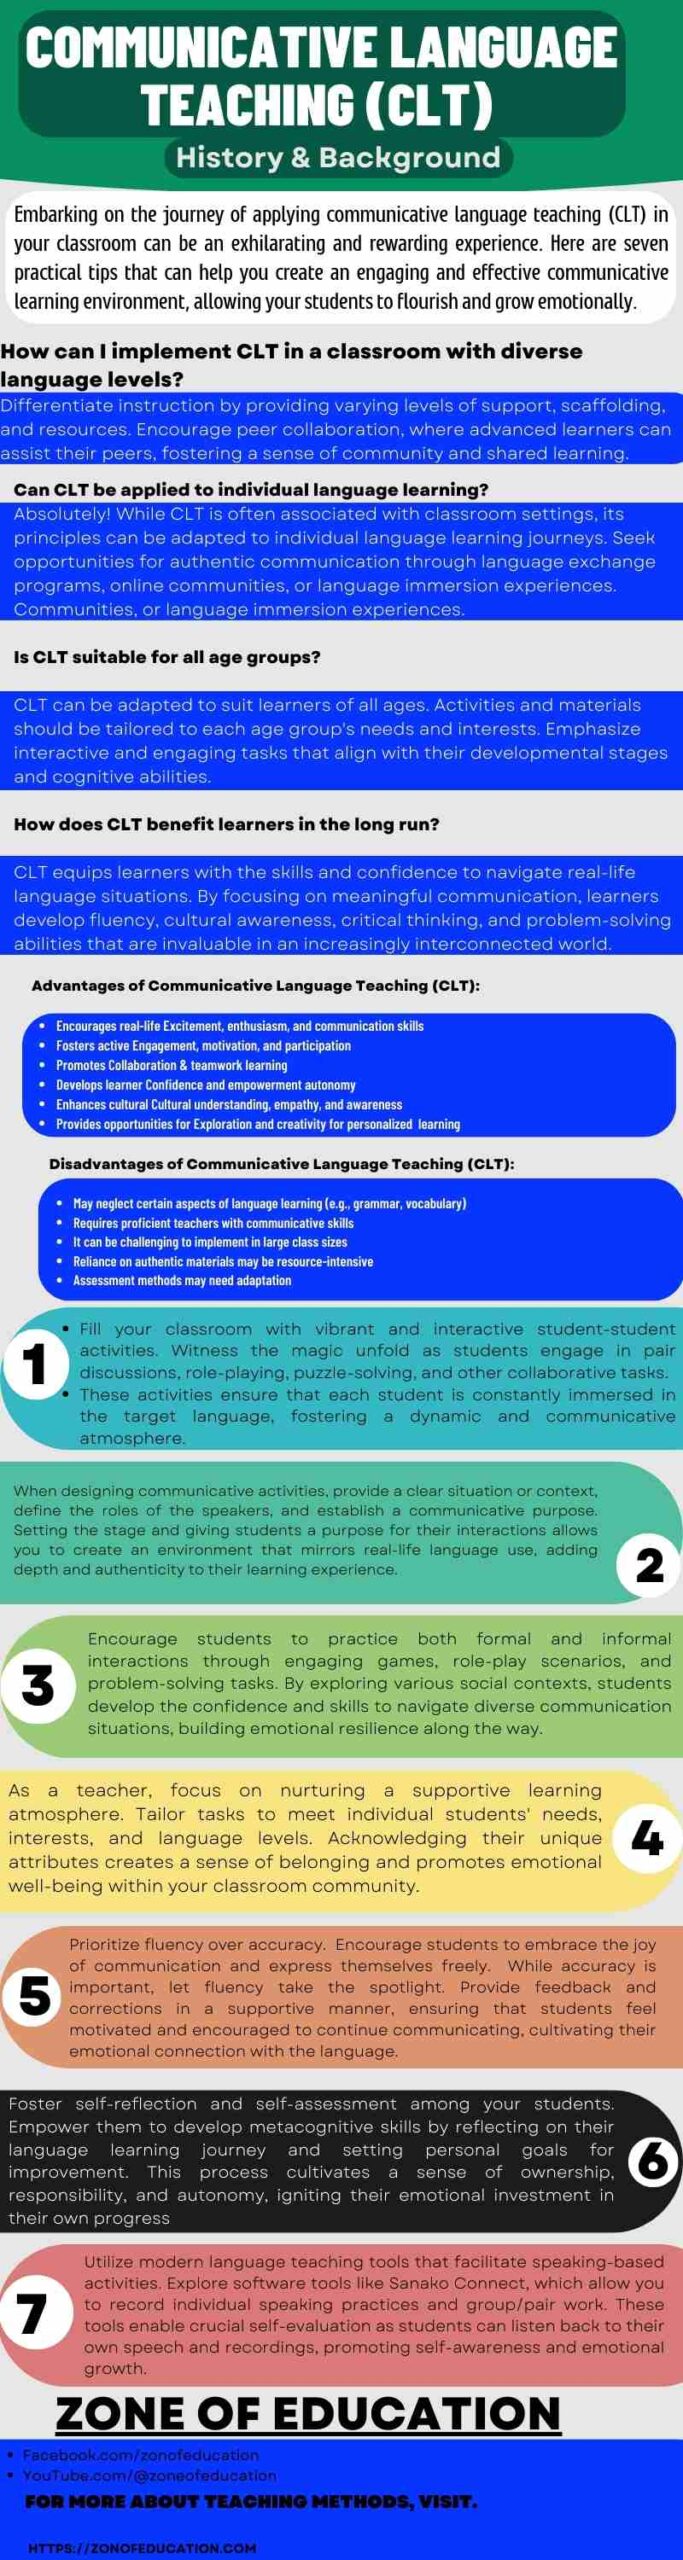 Communicative Language Teaching (CLT) History and Background